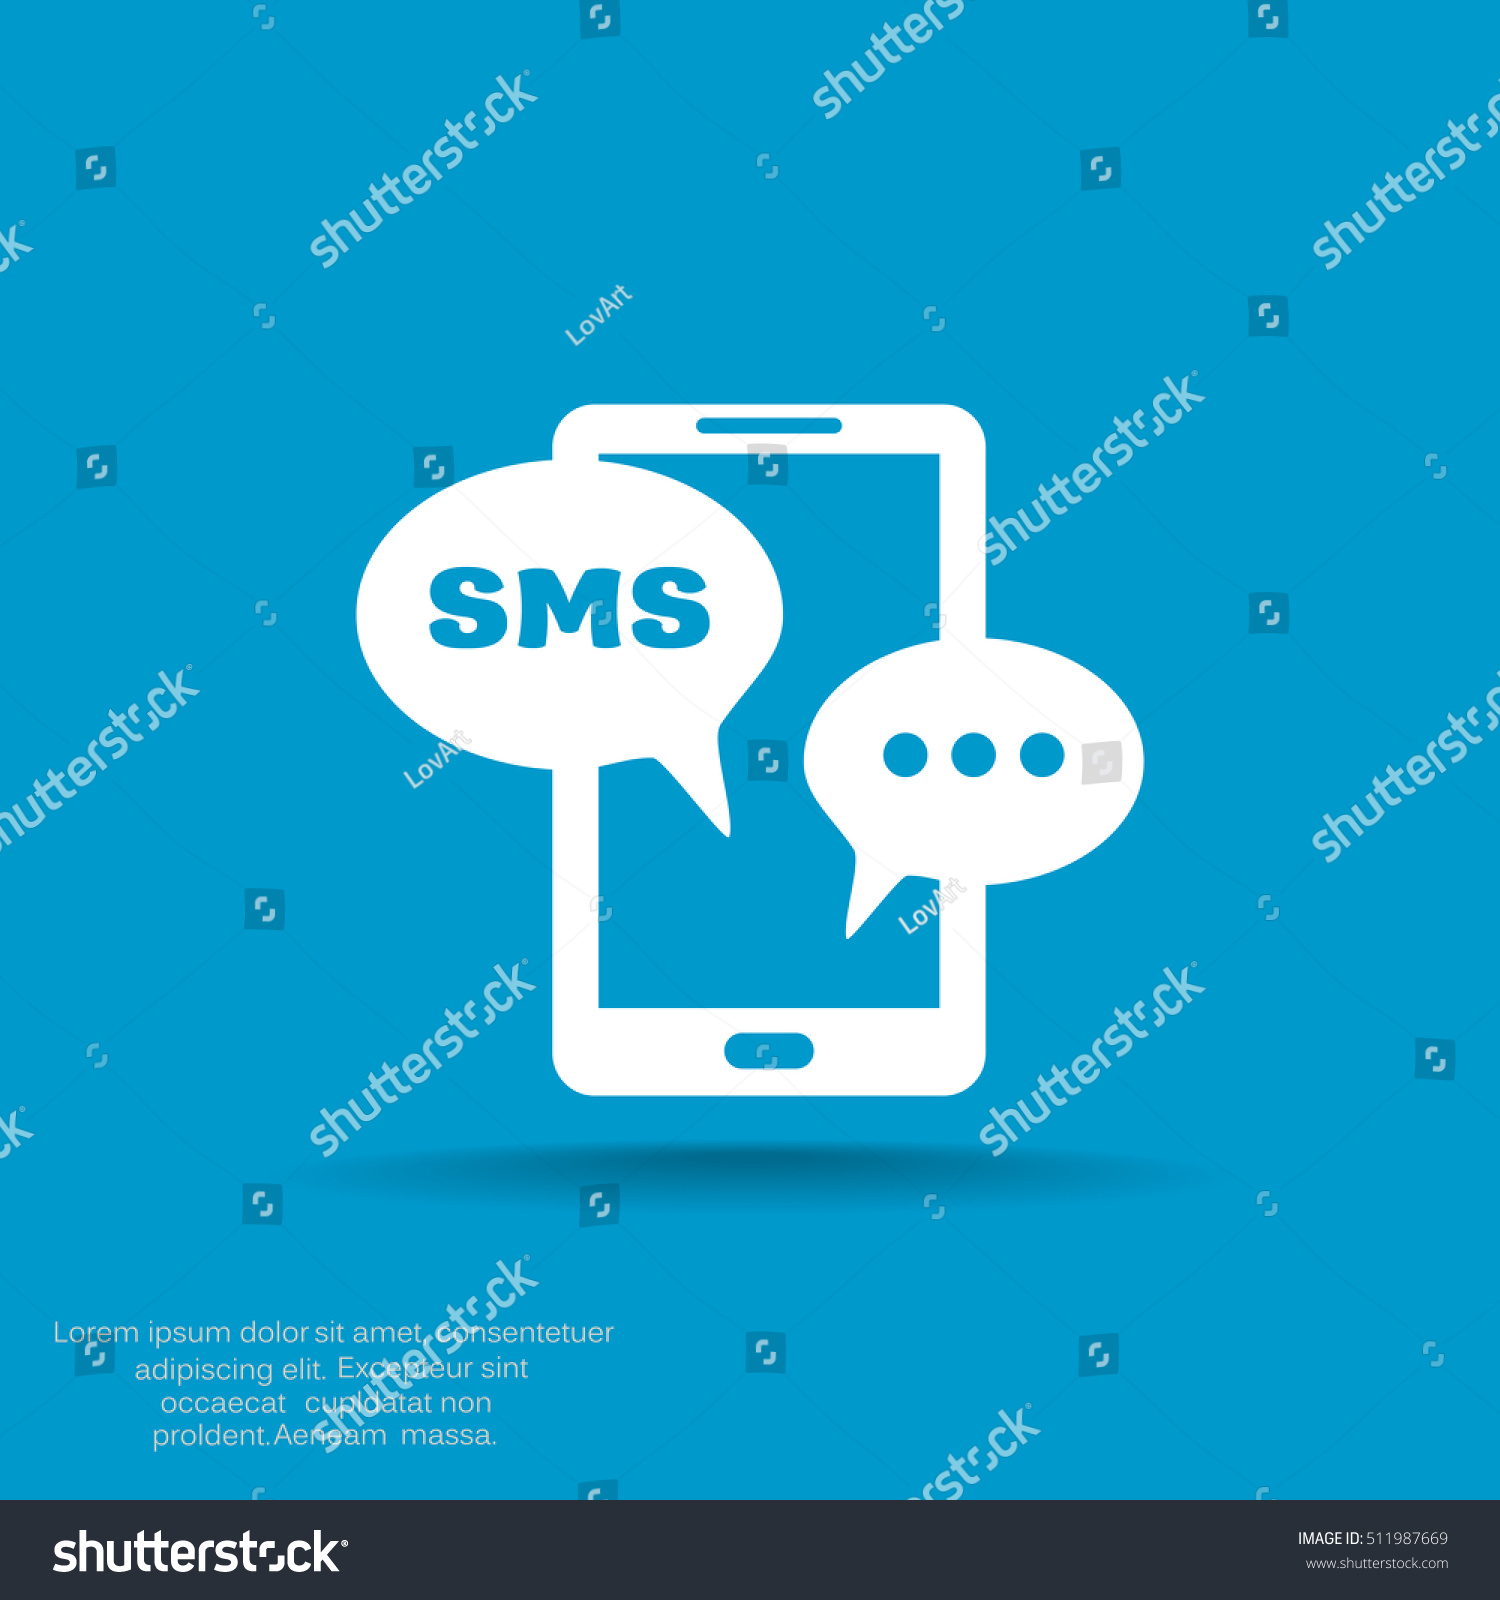 Download Edit Vectors Free Online - Mobile phone | Shutterstock Editor